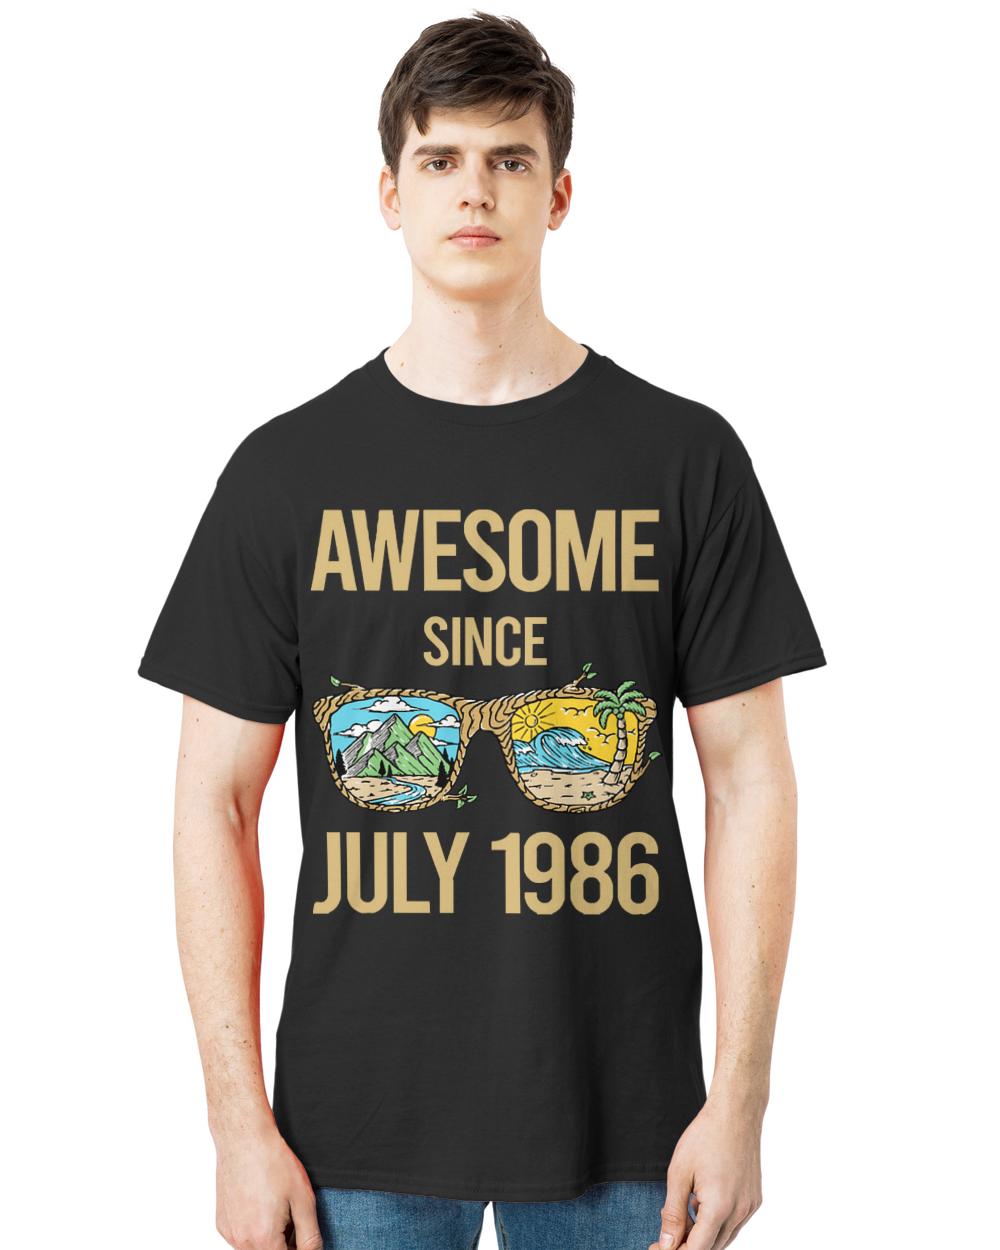 July 1986 T- Shirt Landscape Art - July 1986 T- Shirt